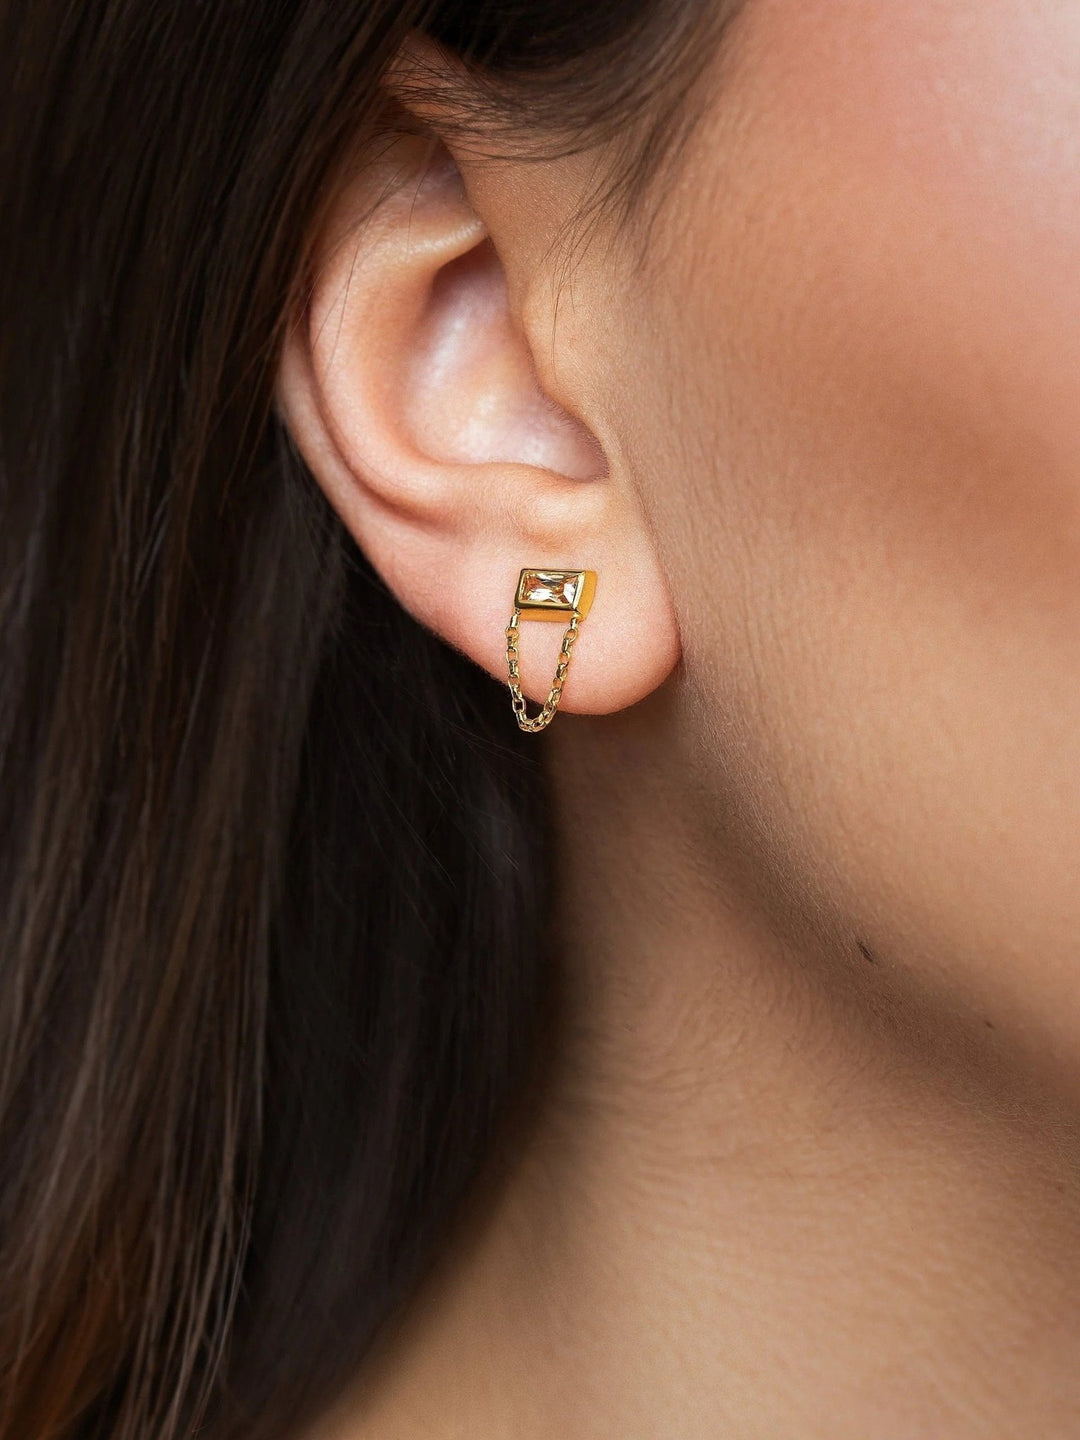 Sirenna Gemstone Stud Earrings - Dark ChampagneAnniversary GiftBoho JewelryLunai Jewelry